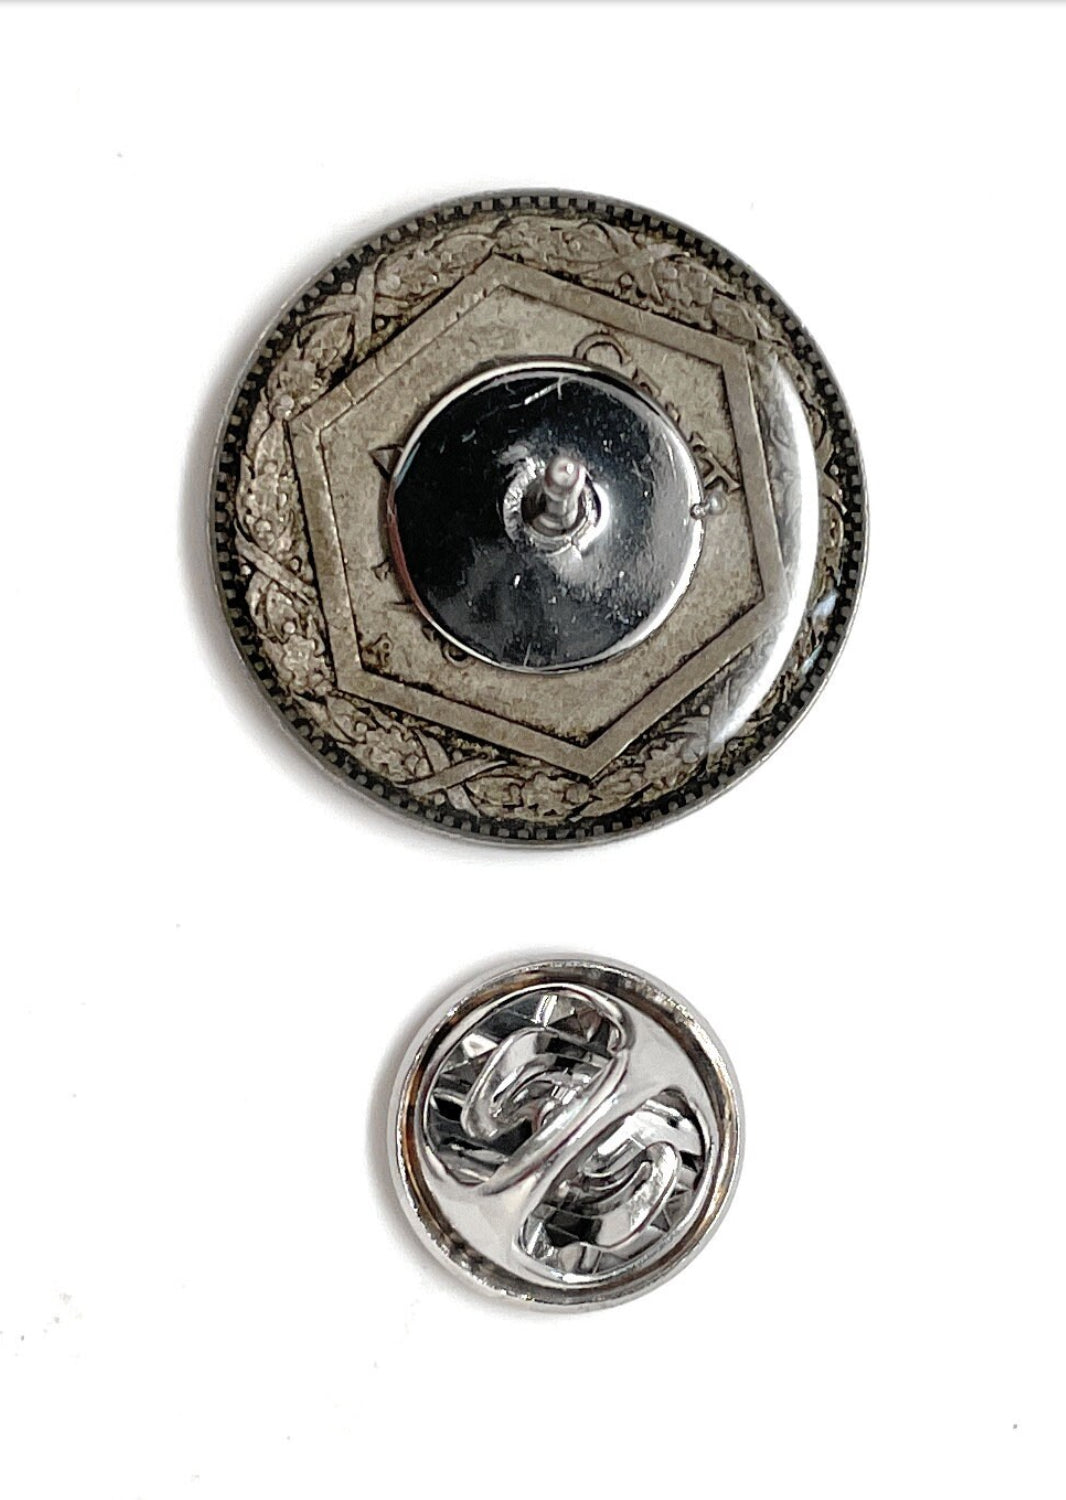 Rare Italy Coin Lapel Pin Authentic 20 Centesimi Marcos Villa 1918-1920 Italy Tie Tack Lapel Pin Italia Rome Italian Coin Naples Venice Rome